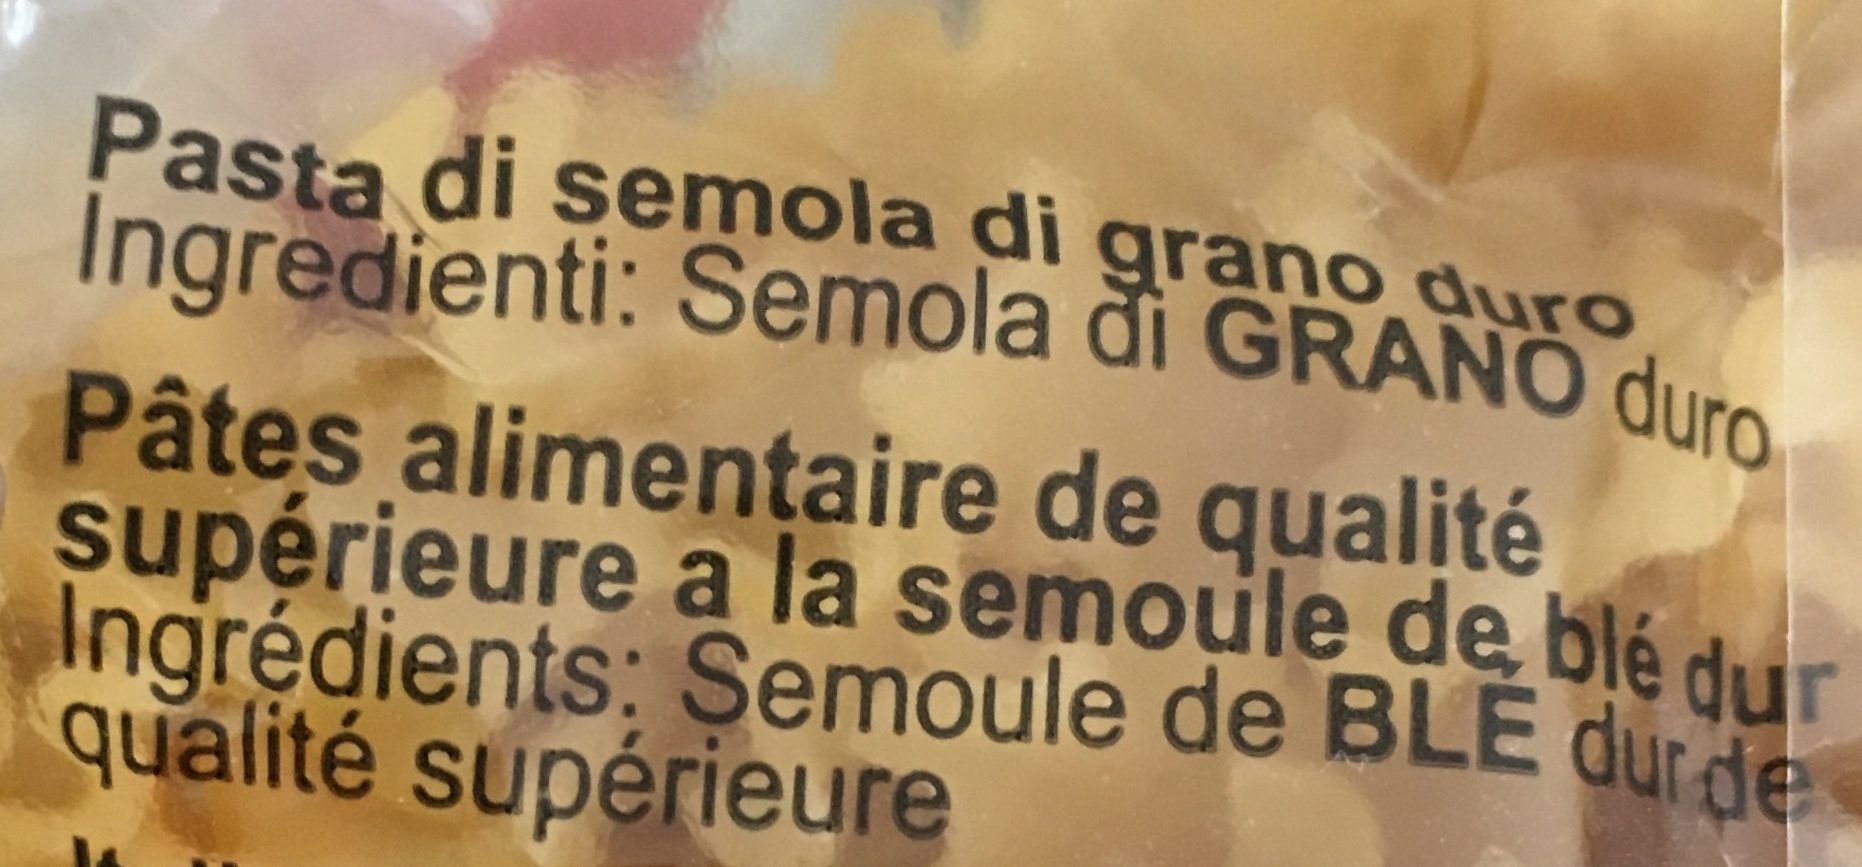 Garofalo mafalda corta igp 500g - Ingredienser - fr